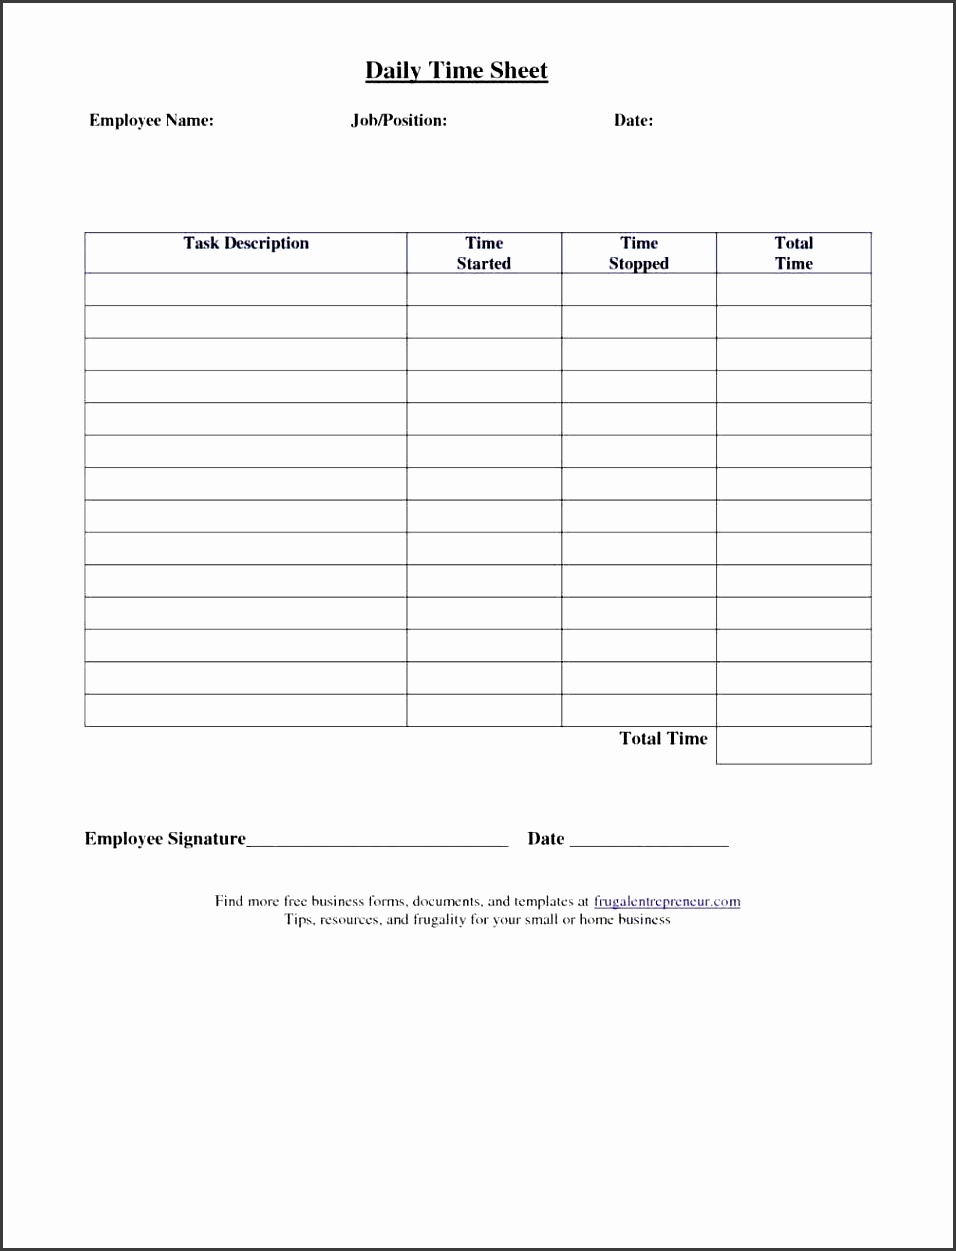 repair log formato de curriculum vitae para vehicle mileage log book template repair log template formato